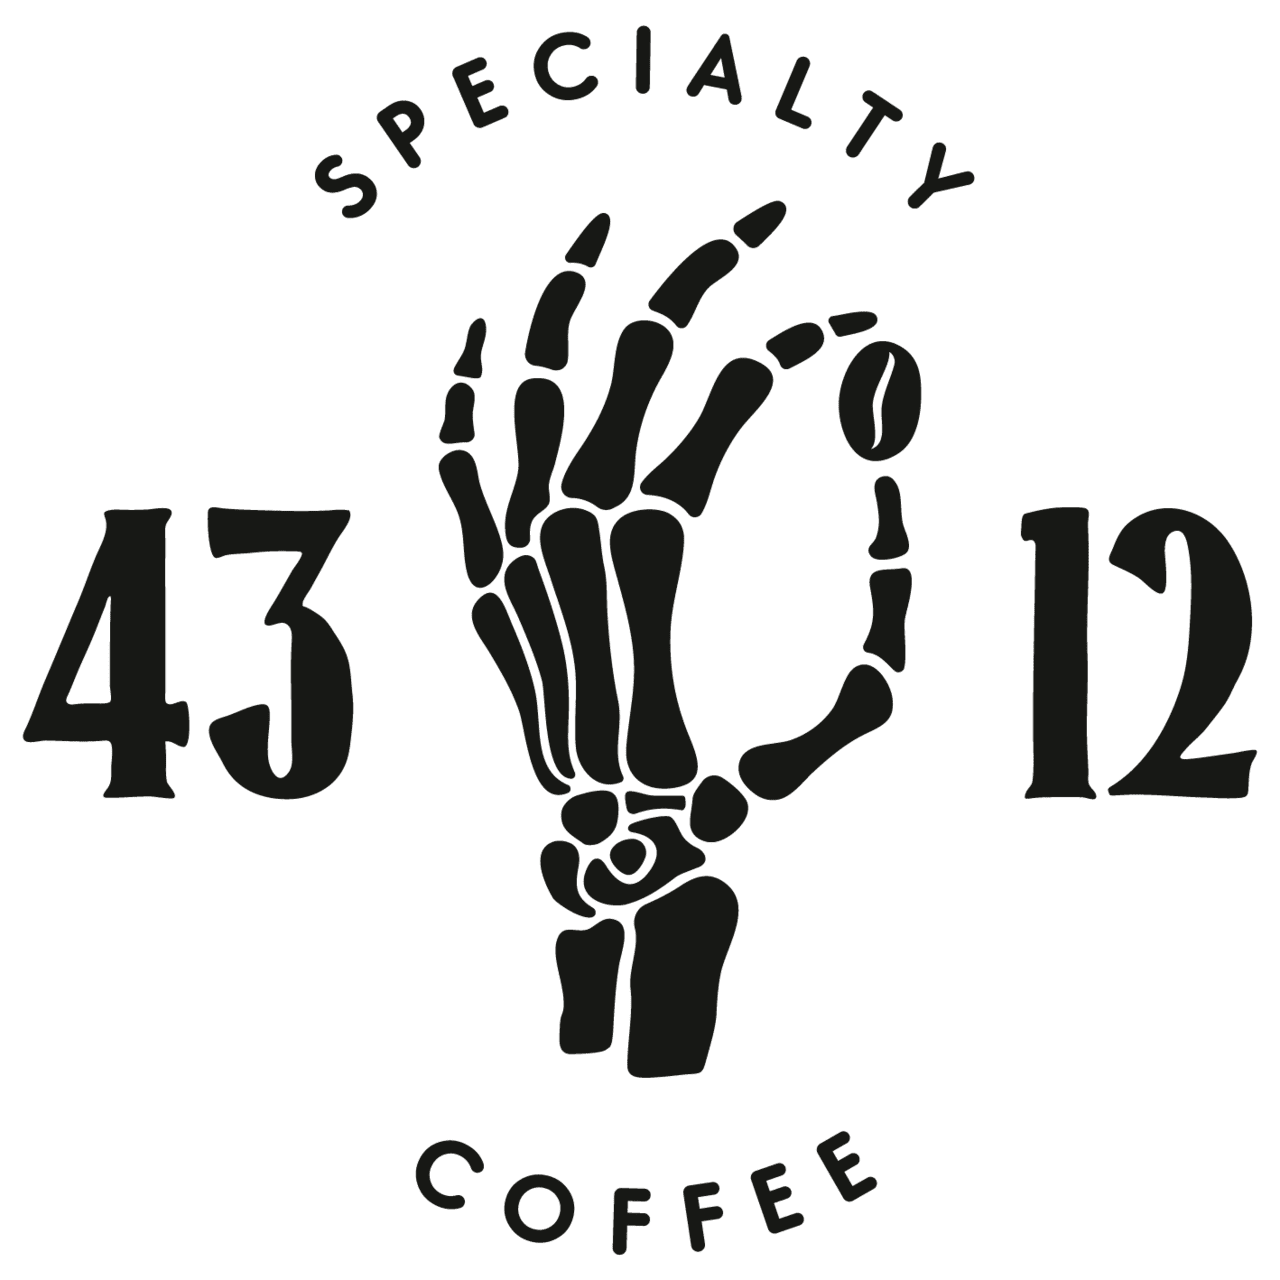 MAHLKONIG X54 COFFEE GRINDER